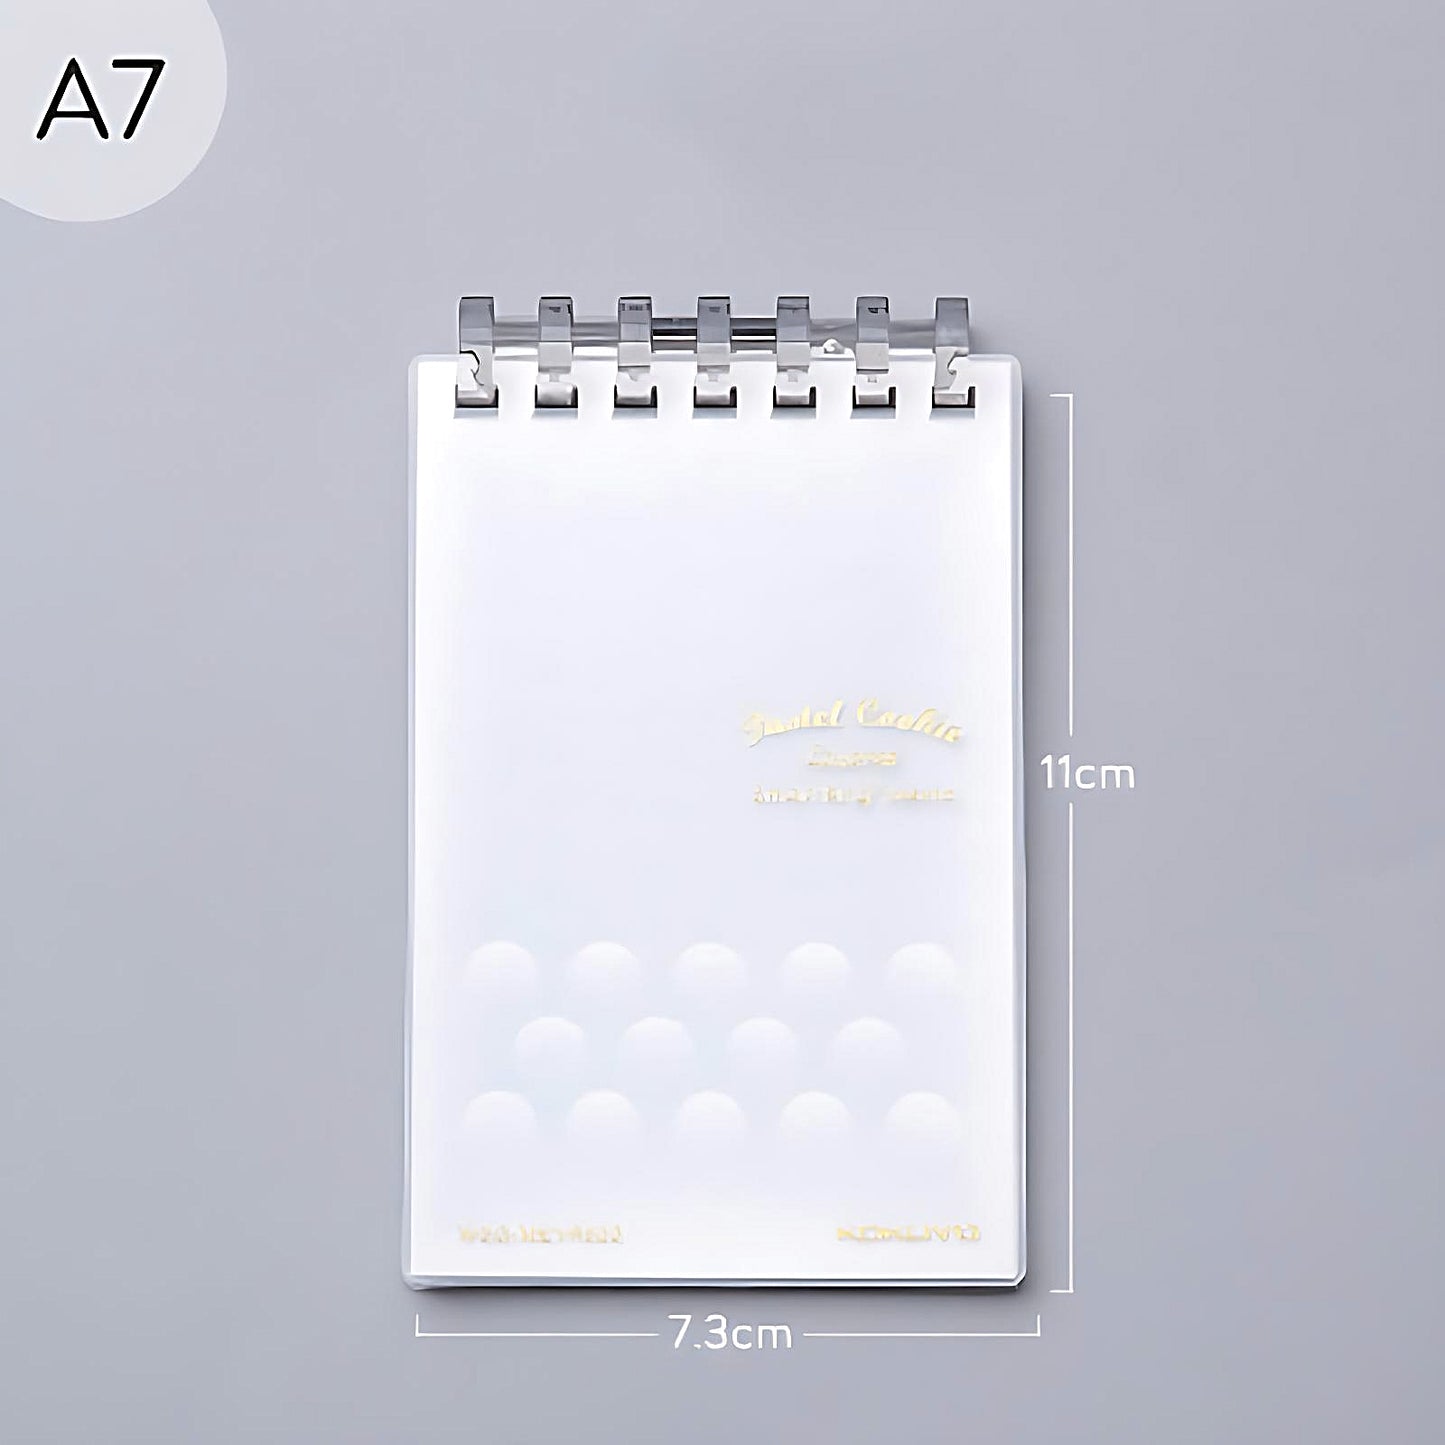 a transparent Kokuyo Smart Ring memo pad on a grey background